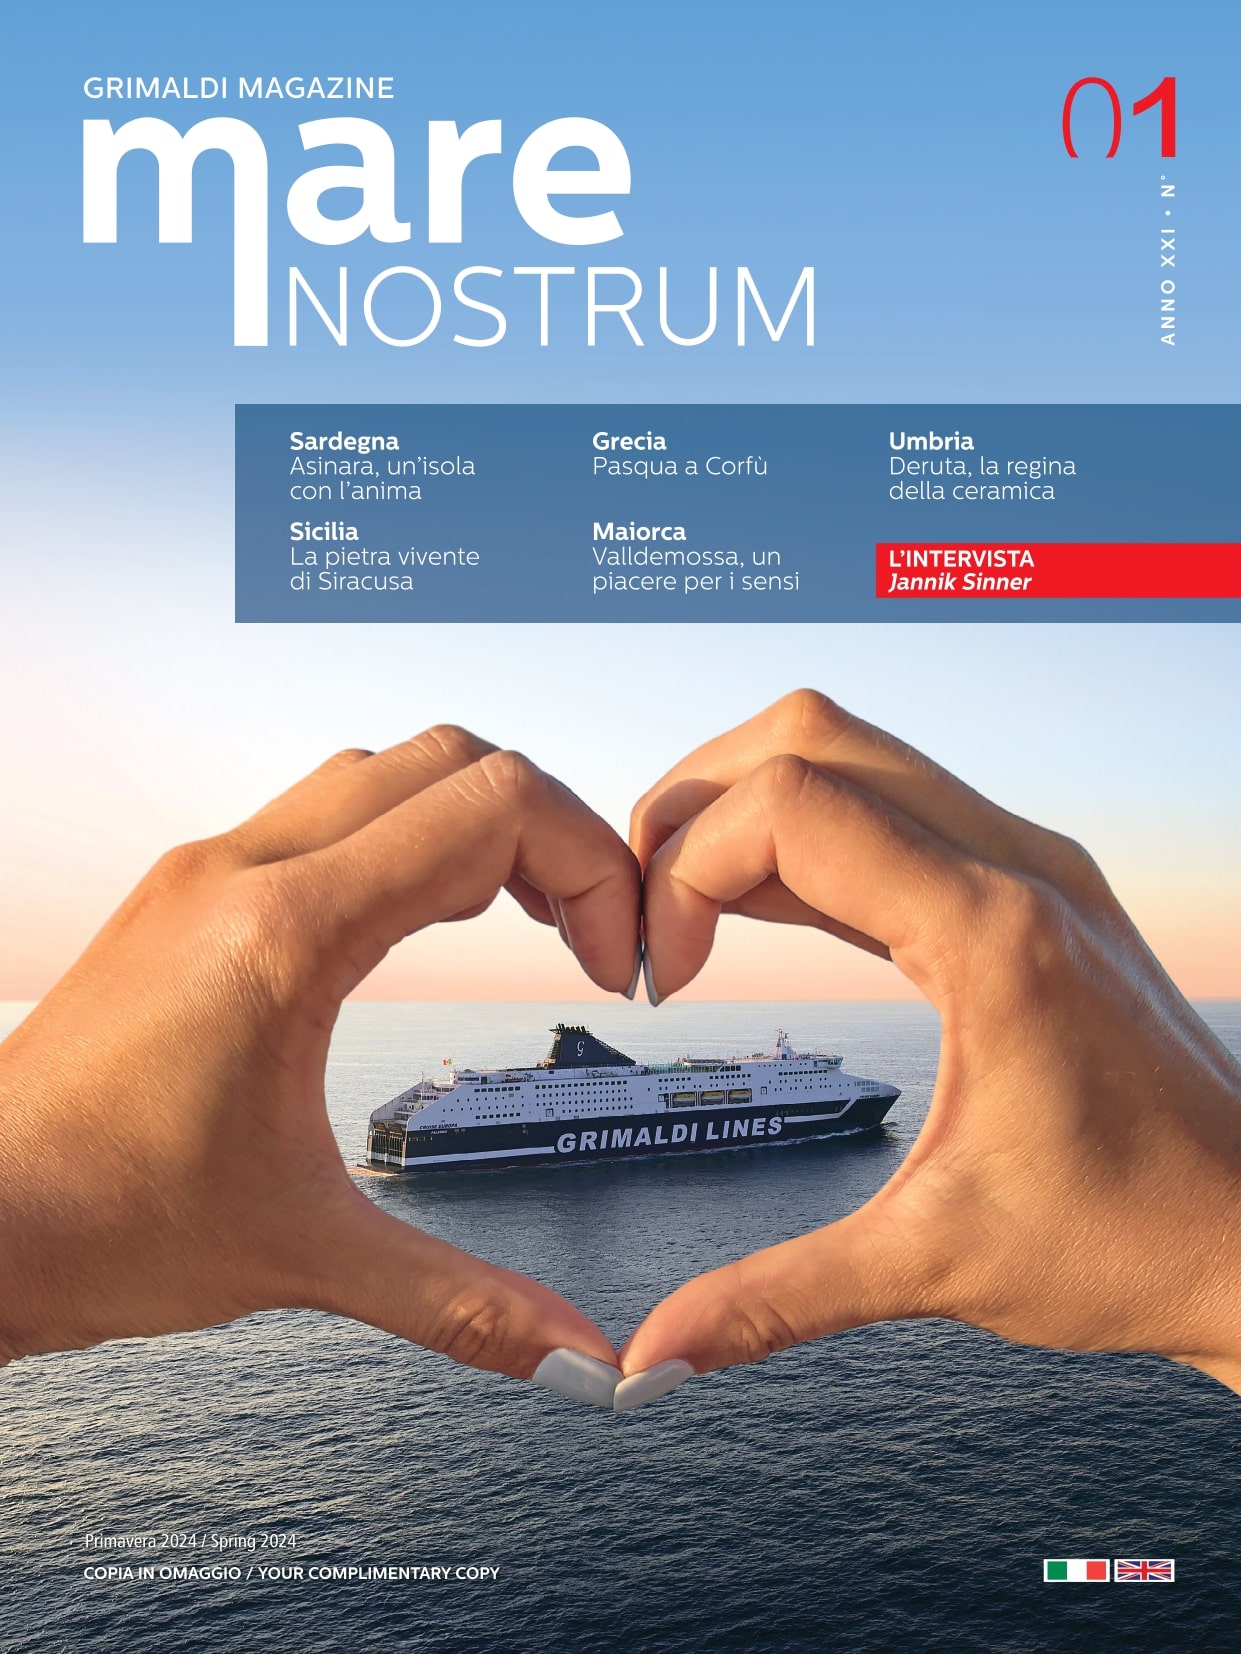 Grimaldi Magazine Mare Nostrum (Year XXI n. 1) Italian-English